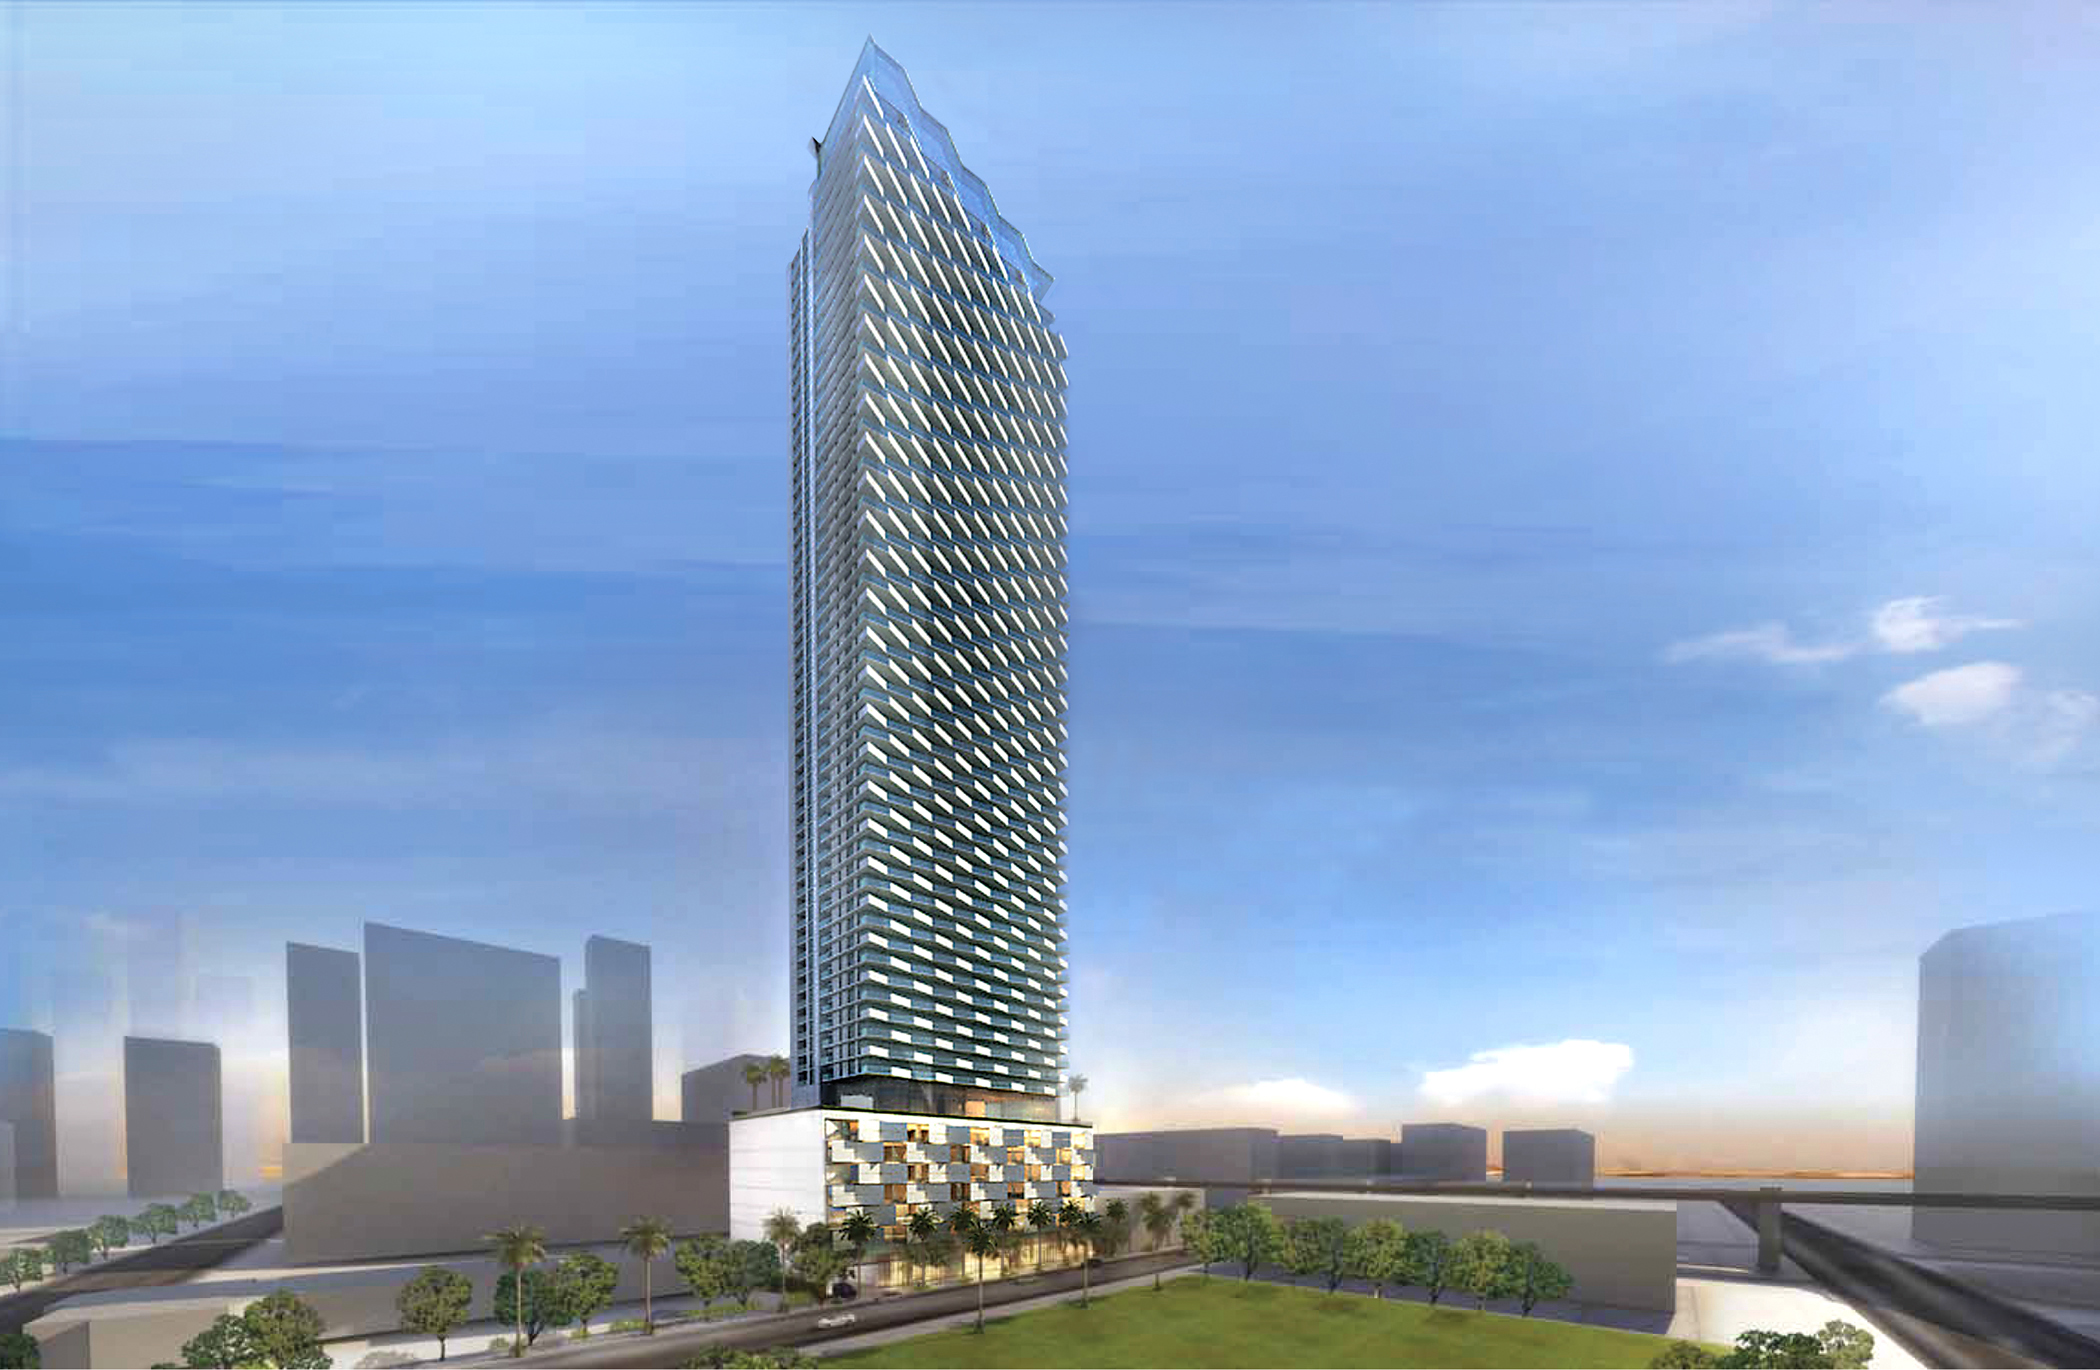 A rendering of Zom's Solitair Brickell rental tower